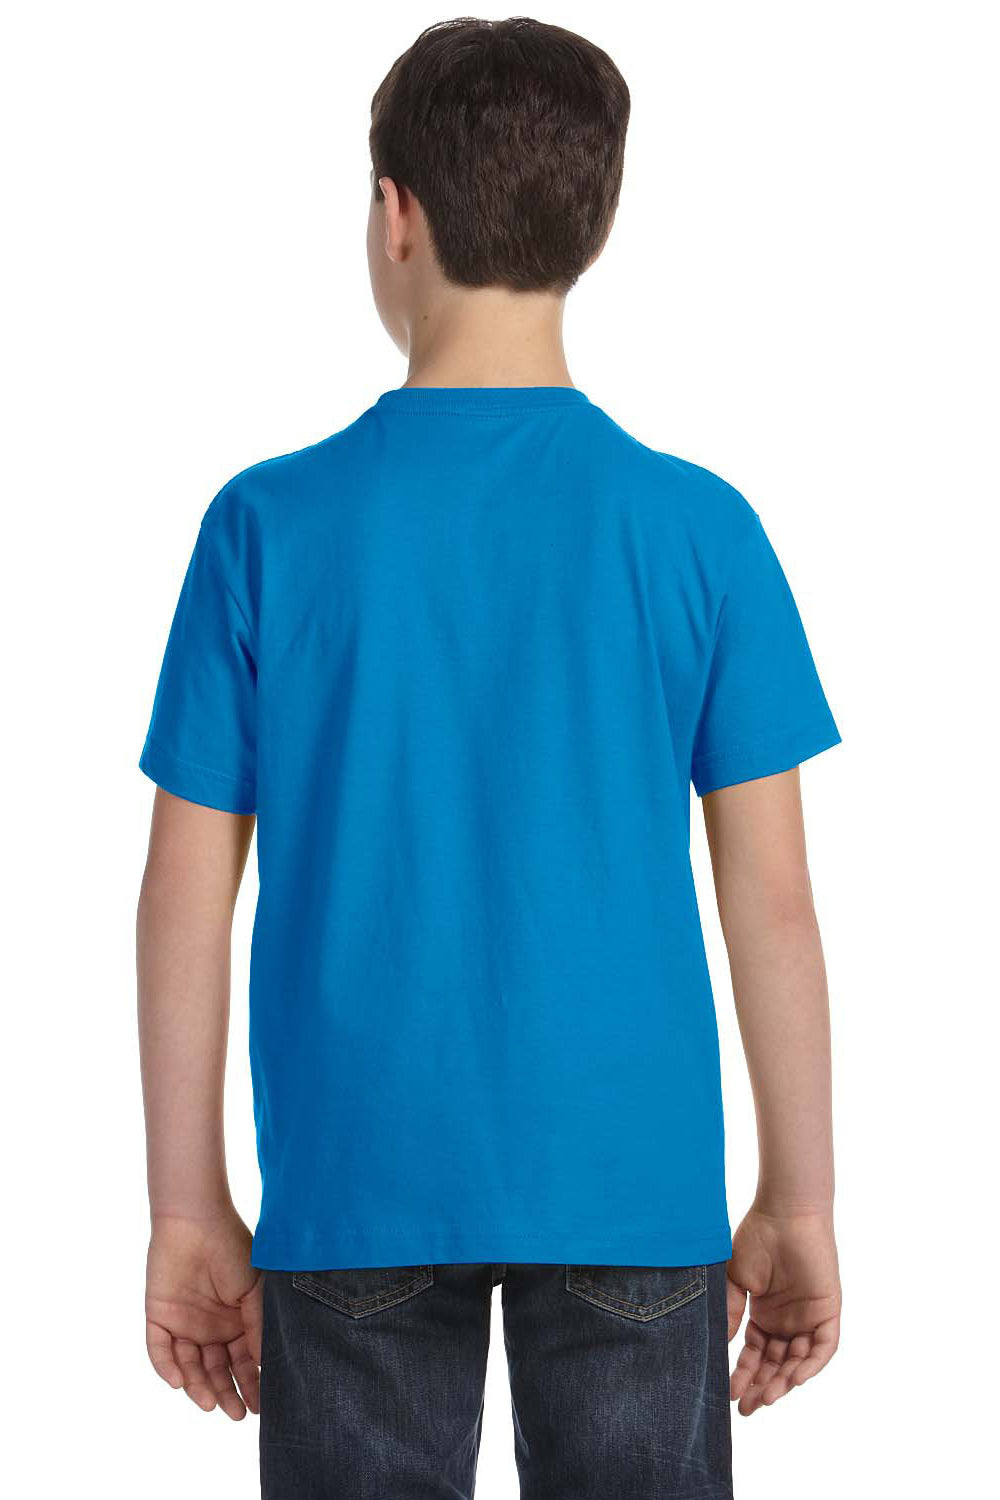 LAT 6101 Youth Fine Jersey Short Sleeve Crewneck T-Shirt Cobalt Blue Back